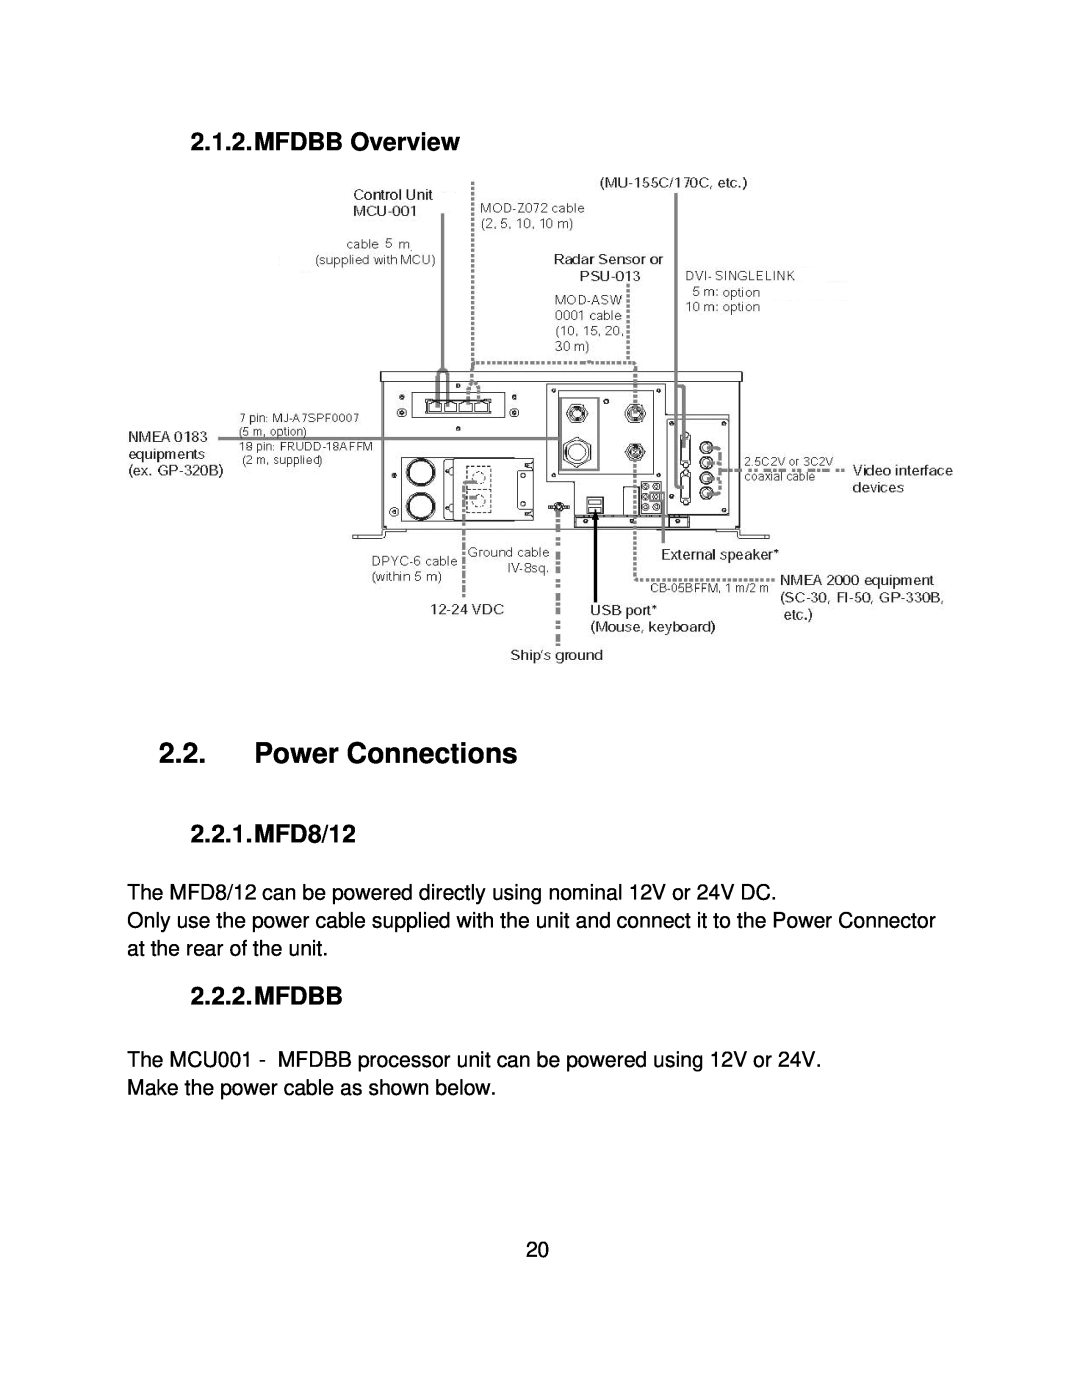 Furuno MFD8/12/BB manual Power Connections, MFDBB Overview, 2.2.1.MFD8/12, Mfdbb 